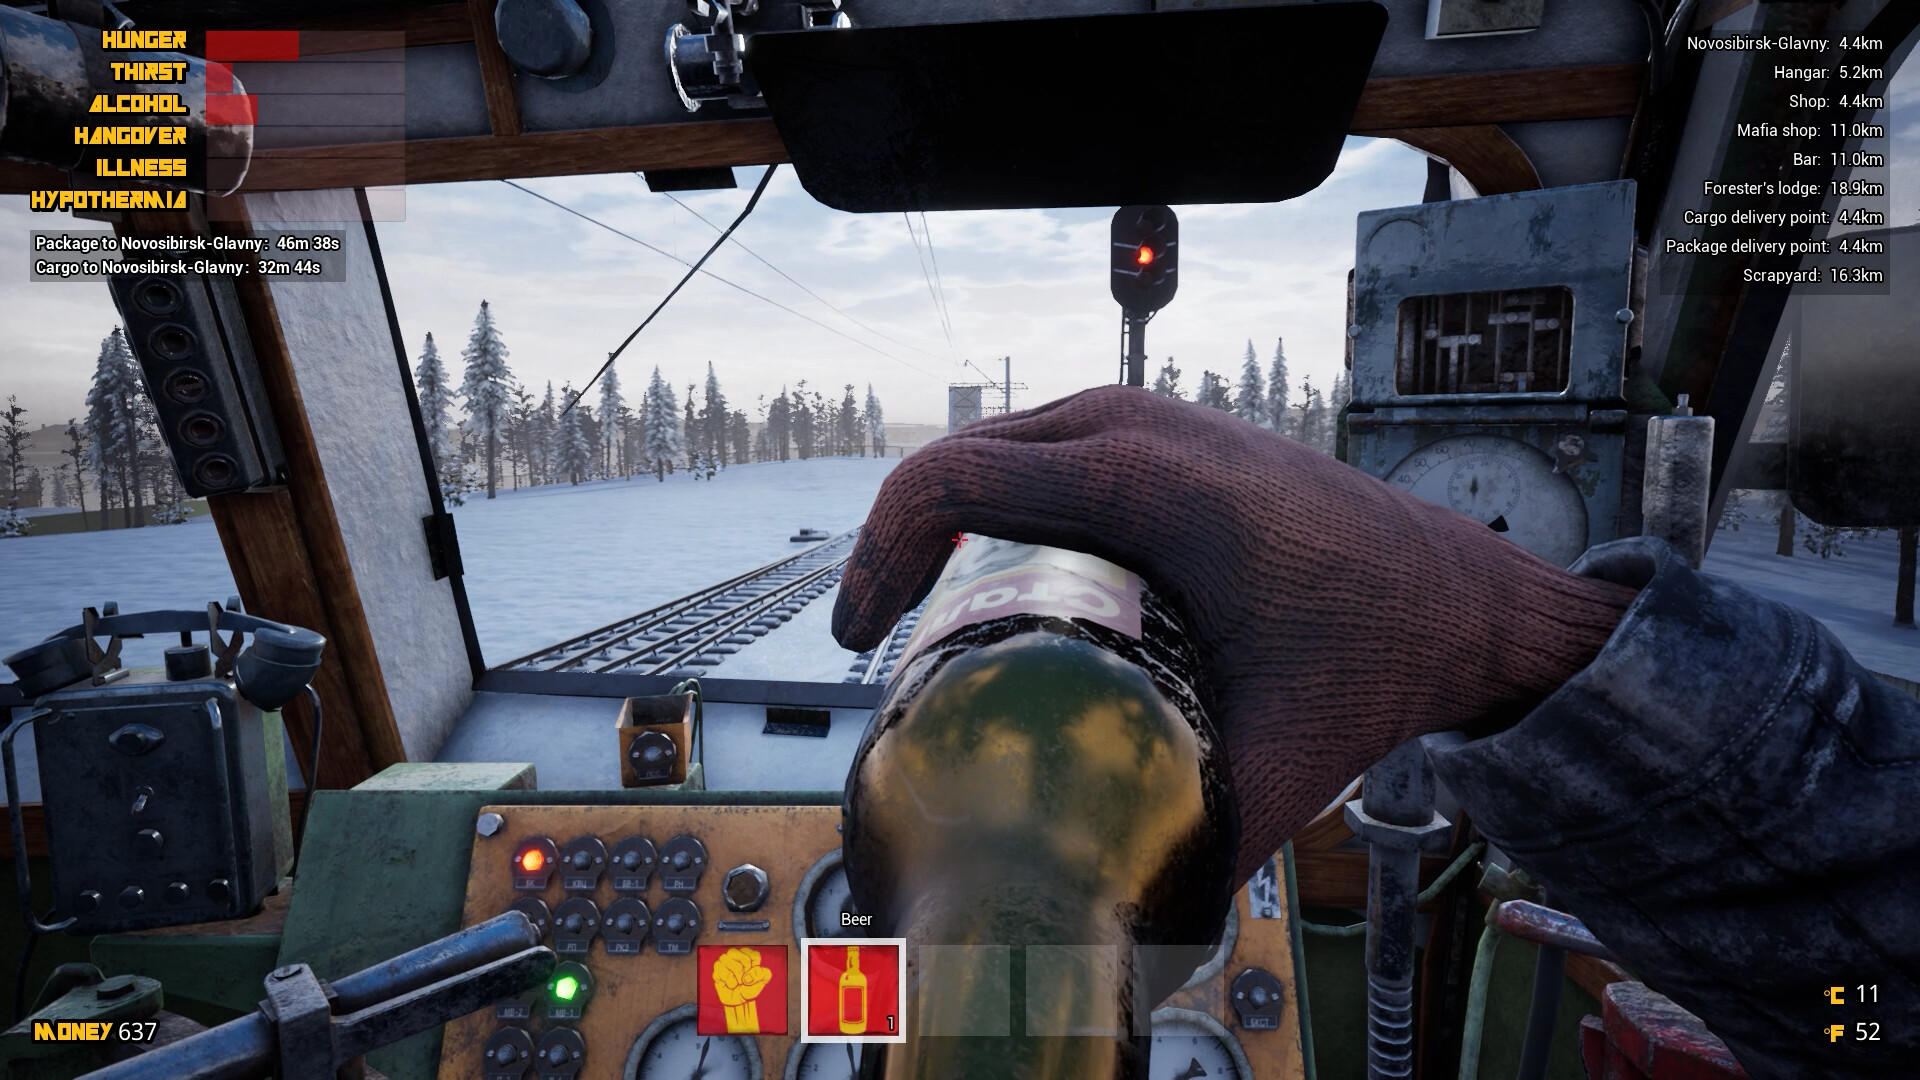 Screenshot 1 of ဆိုက်ဘေးရီးယားဖြတ်ကျော် မီးရထား Simulator- စကားချီး 